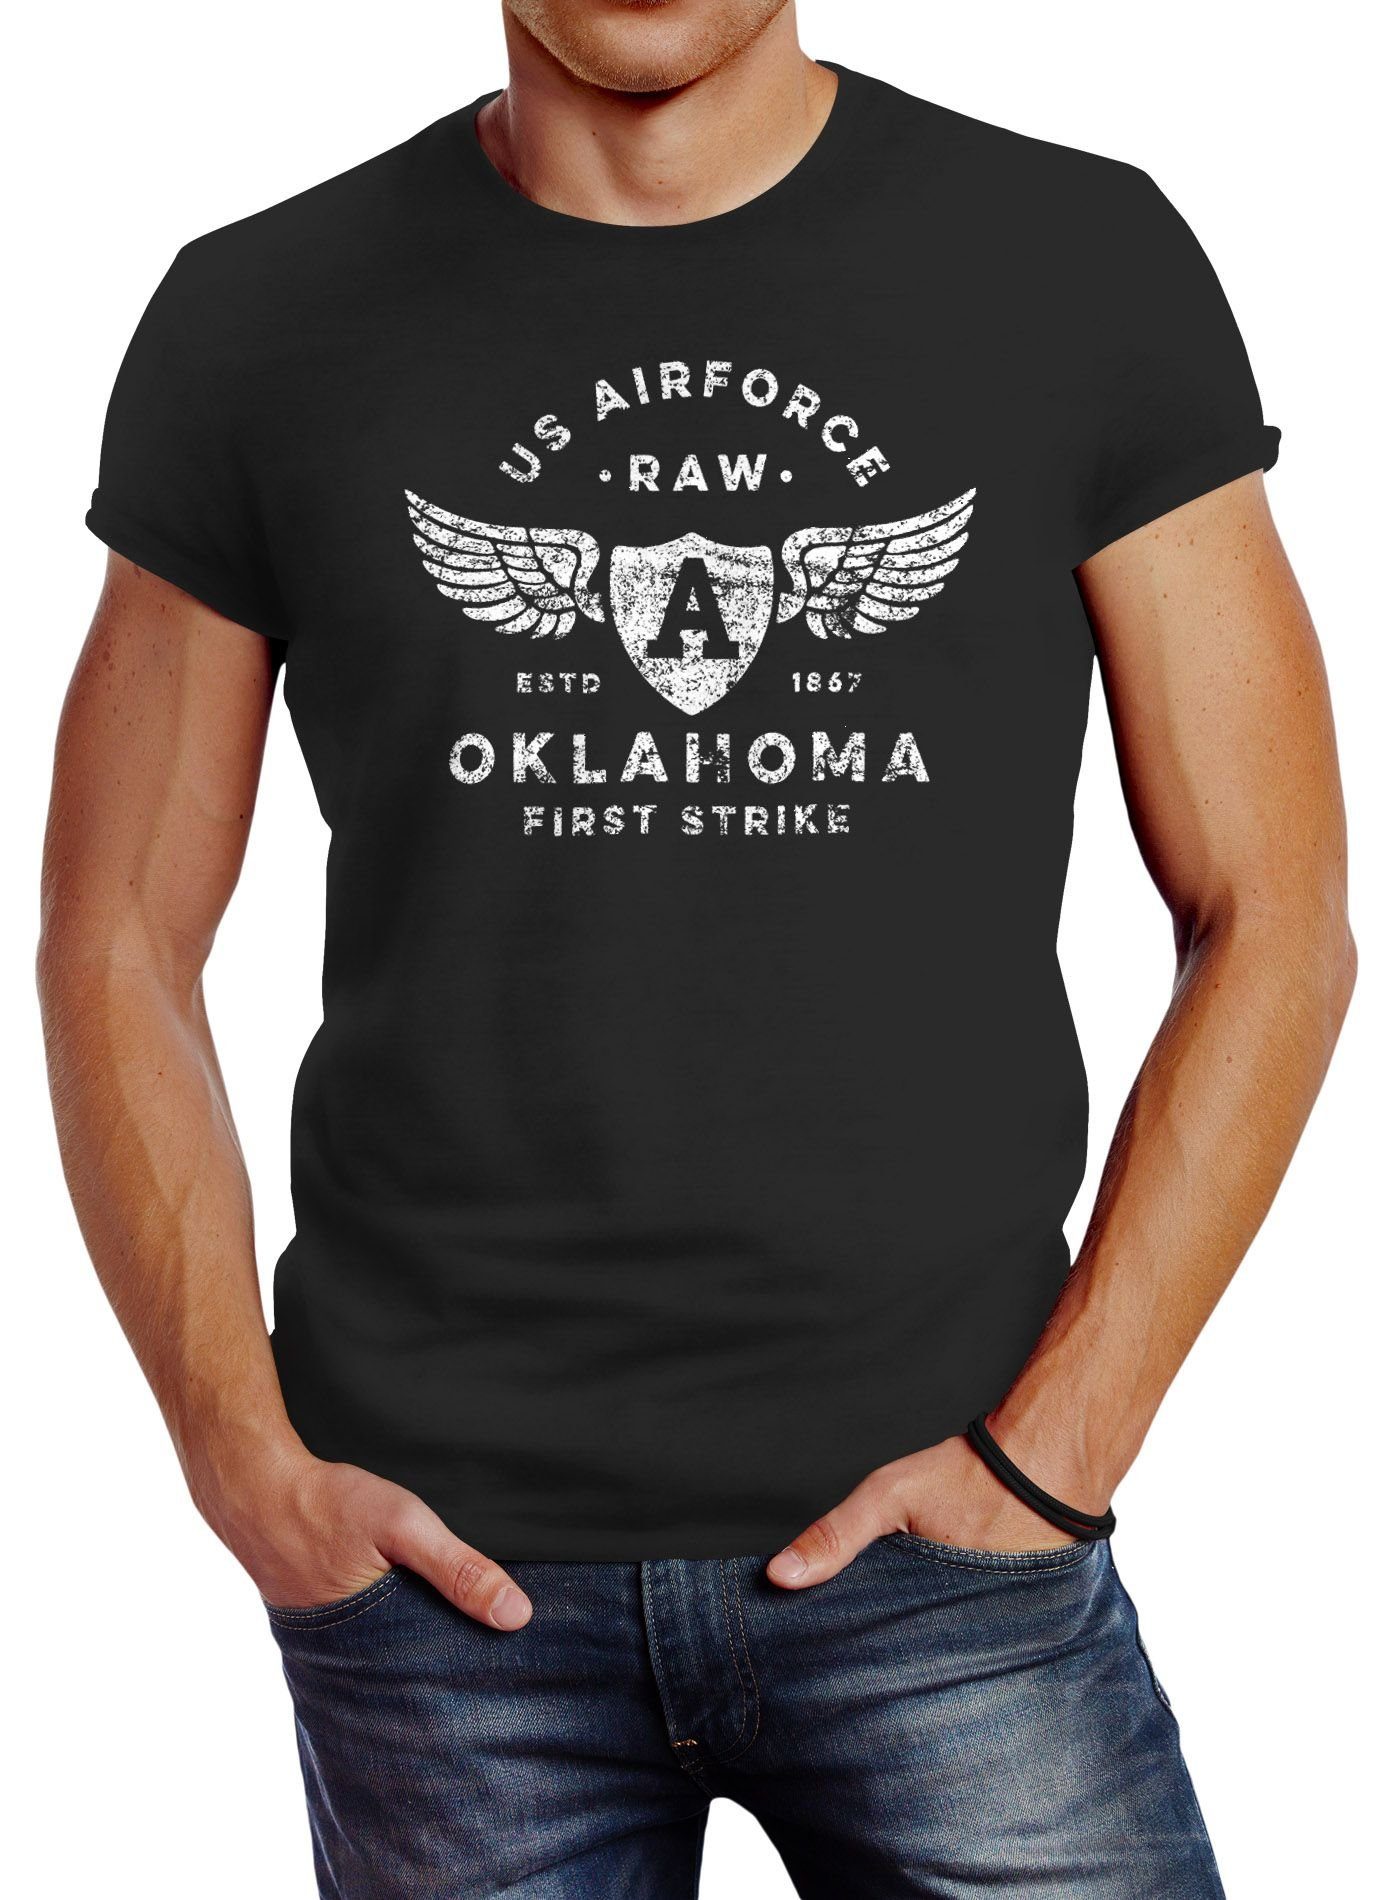 Print Airforce Neverless® Print US Herren T-Shirt mit Oklahoma Aviator schwarz Neverless Print-Shirt Vintage-Shirt